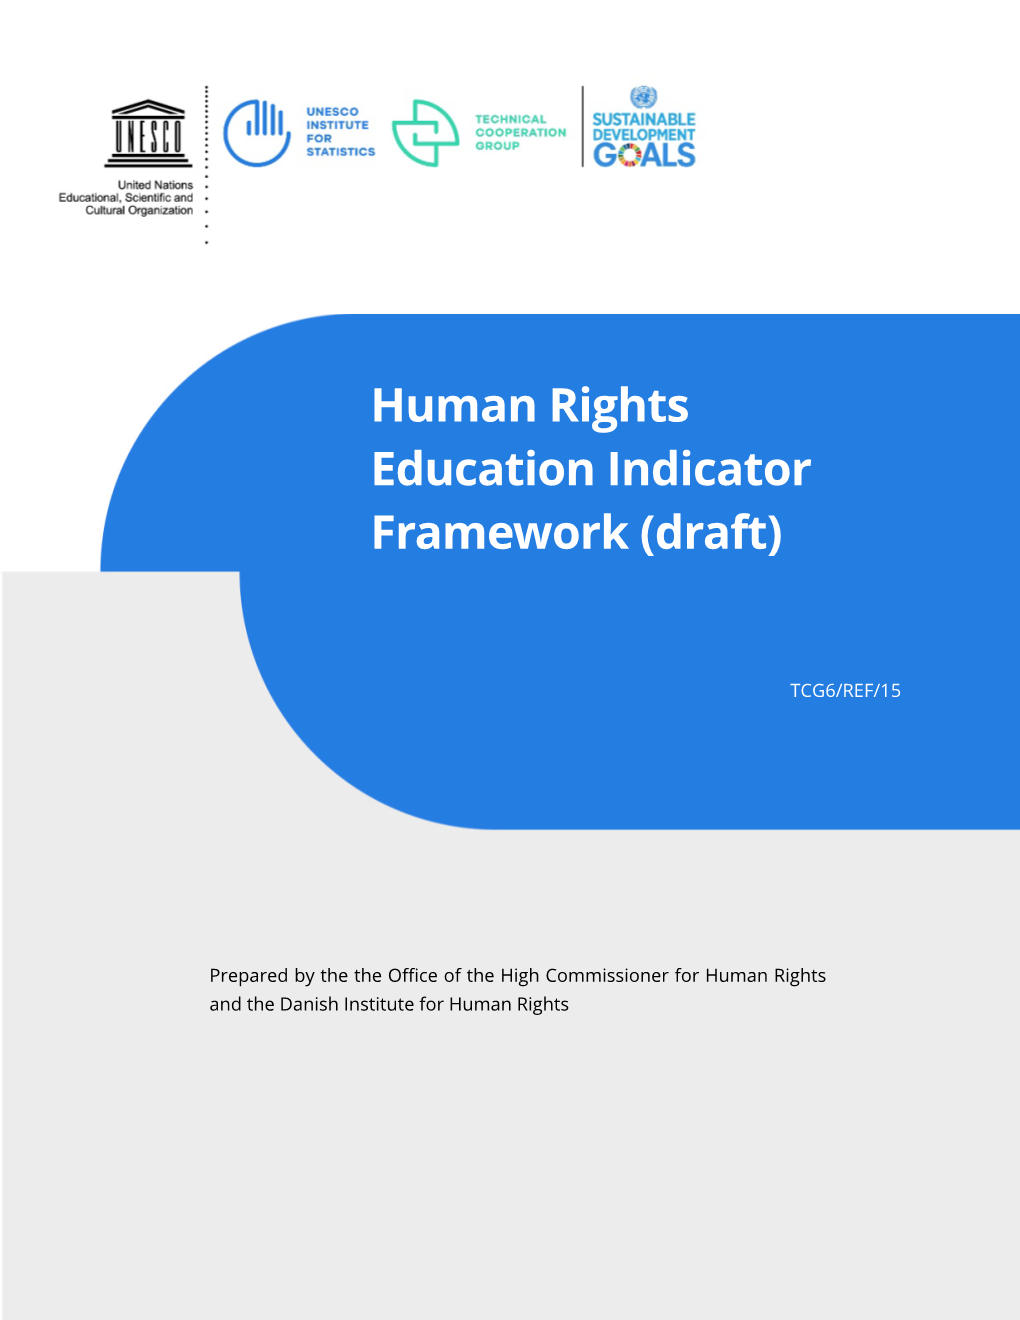 REF/15 Human Rights Education Indicator Framework (Draft)